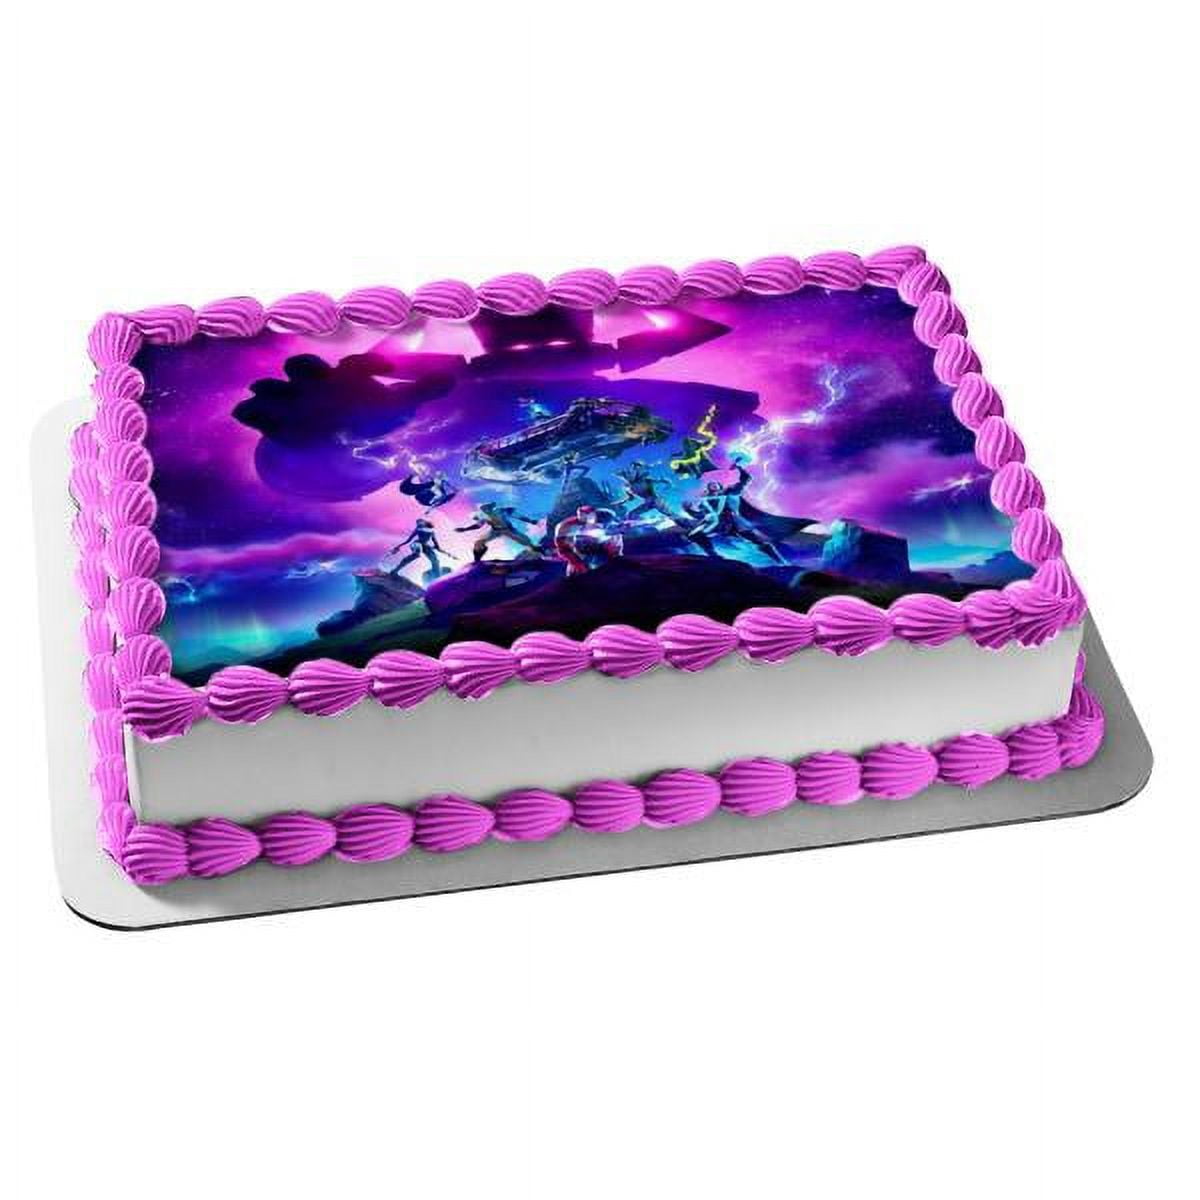 Fortnite Birthday Cake - Fondant | cakewaves